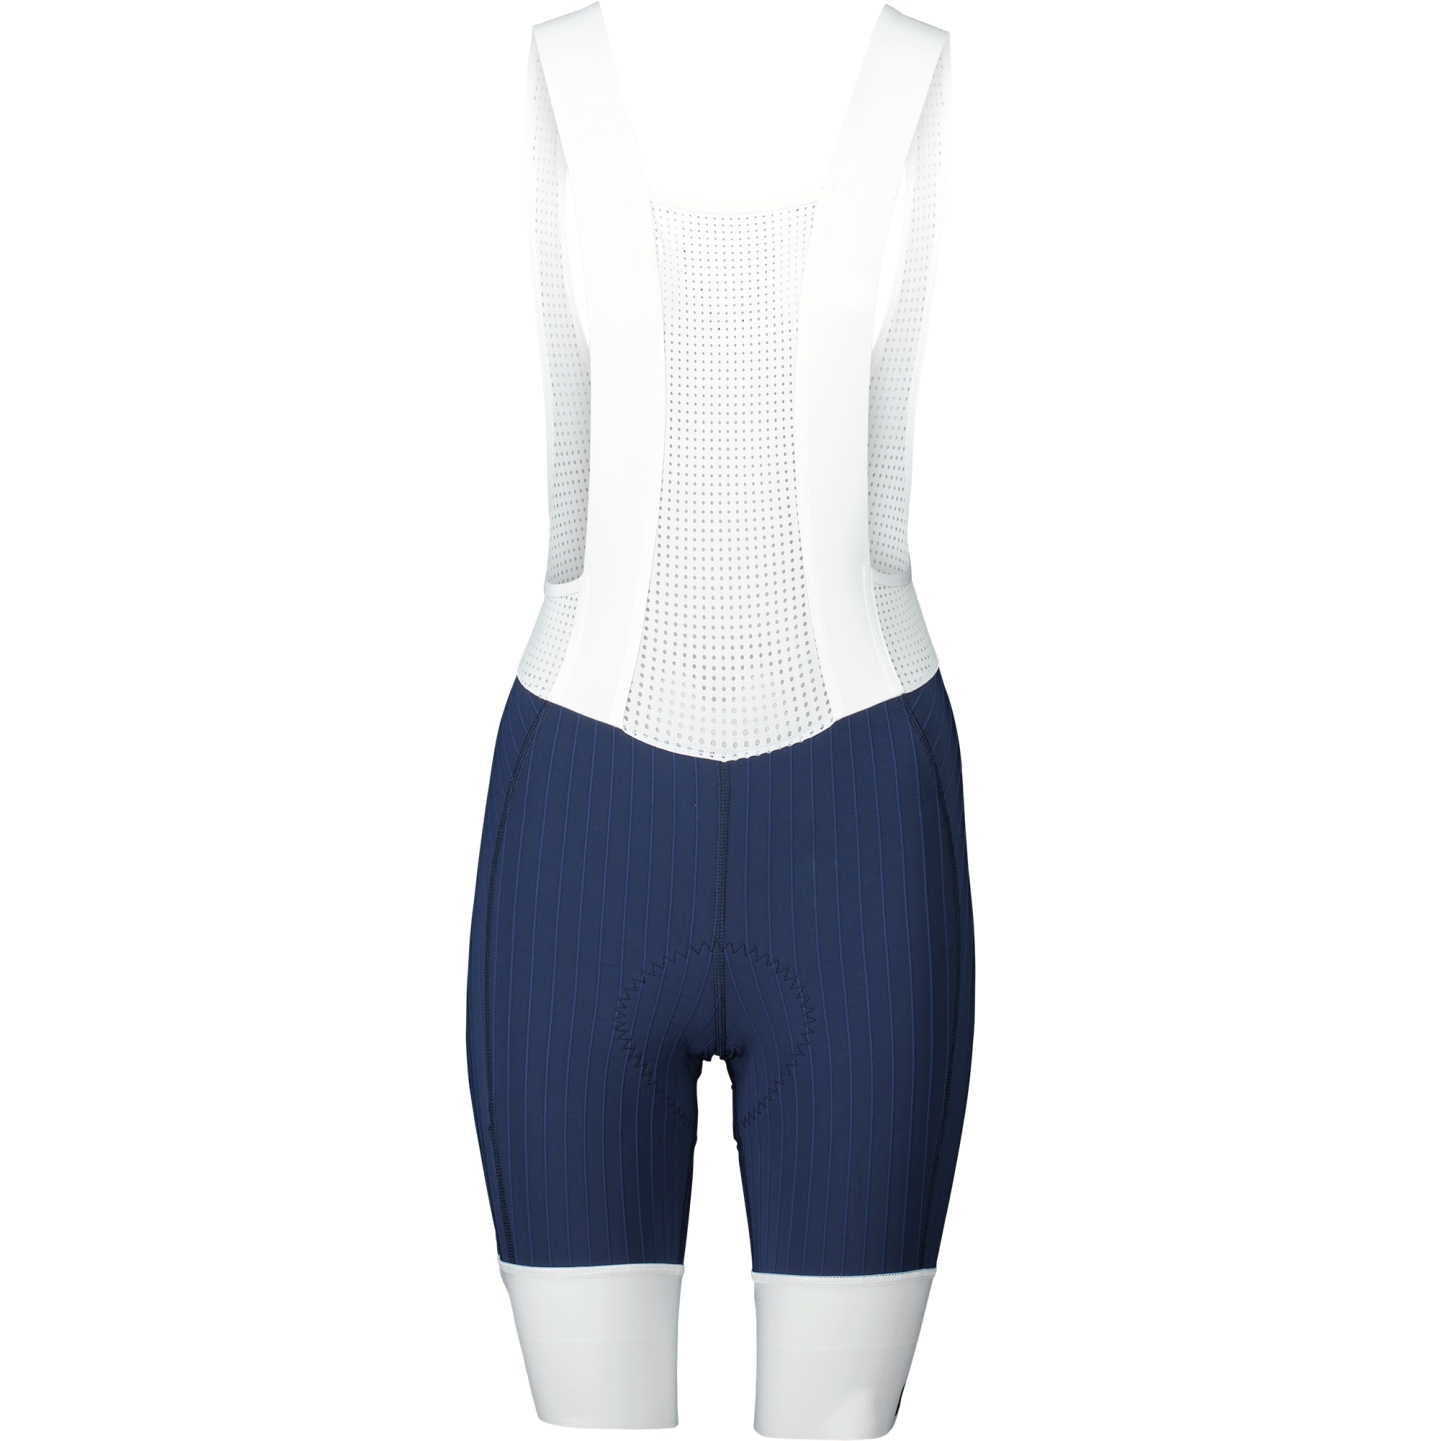 Picture of POC Raceday Bib Shorts Women - 8521 Turmaline Navy/Hydrogen White